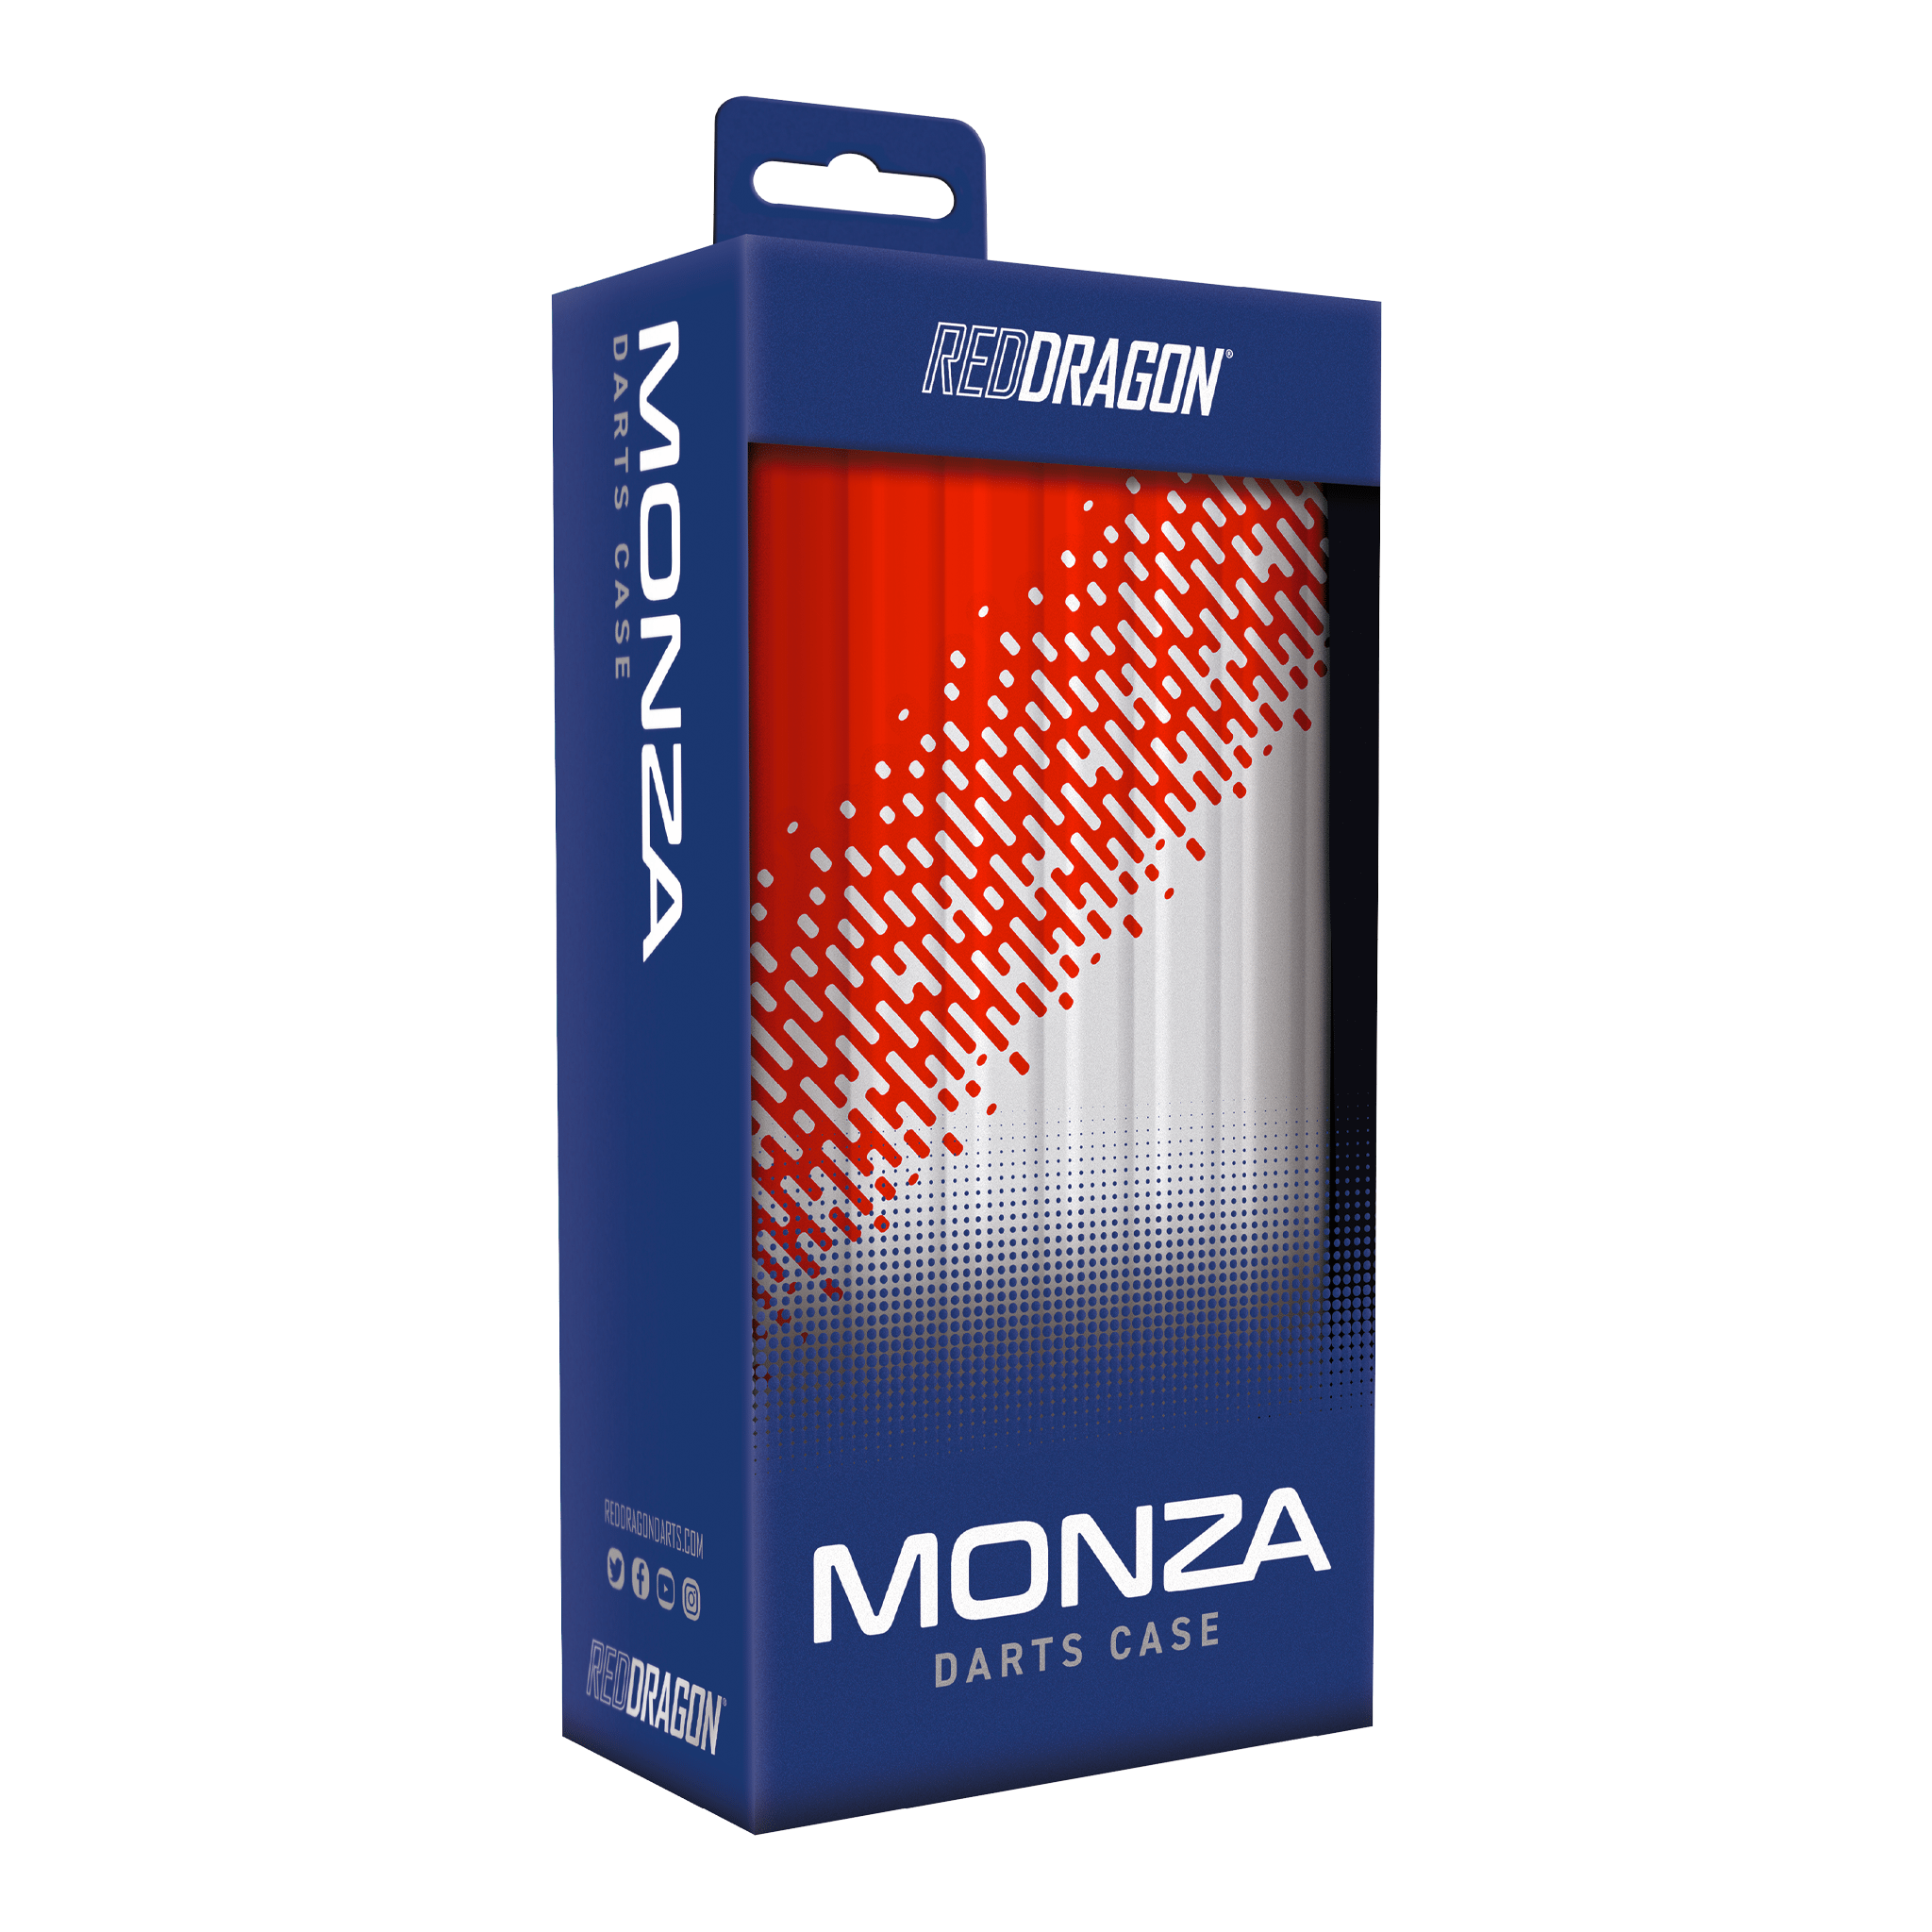 Red Dragon Monza Darts Case Cases